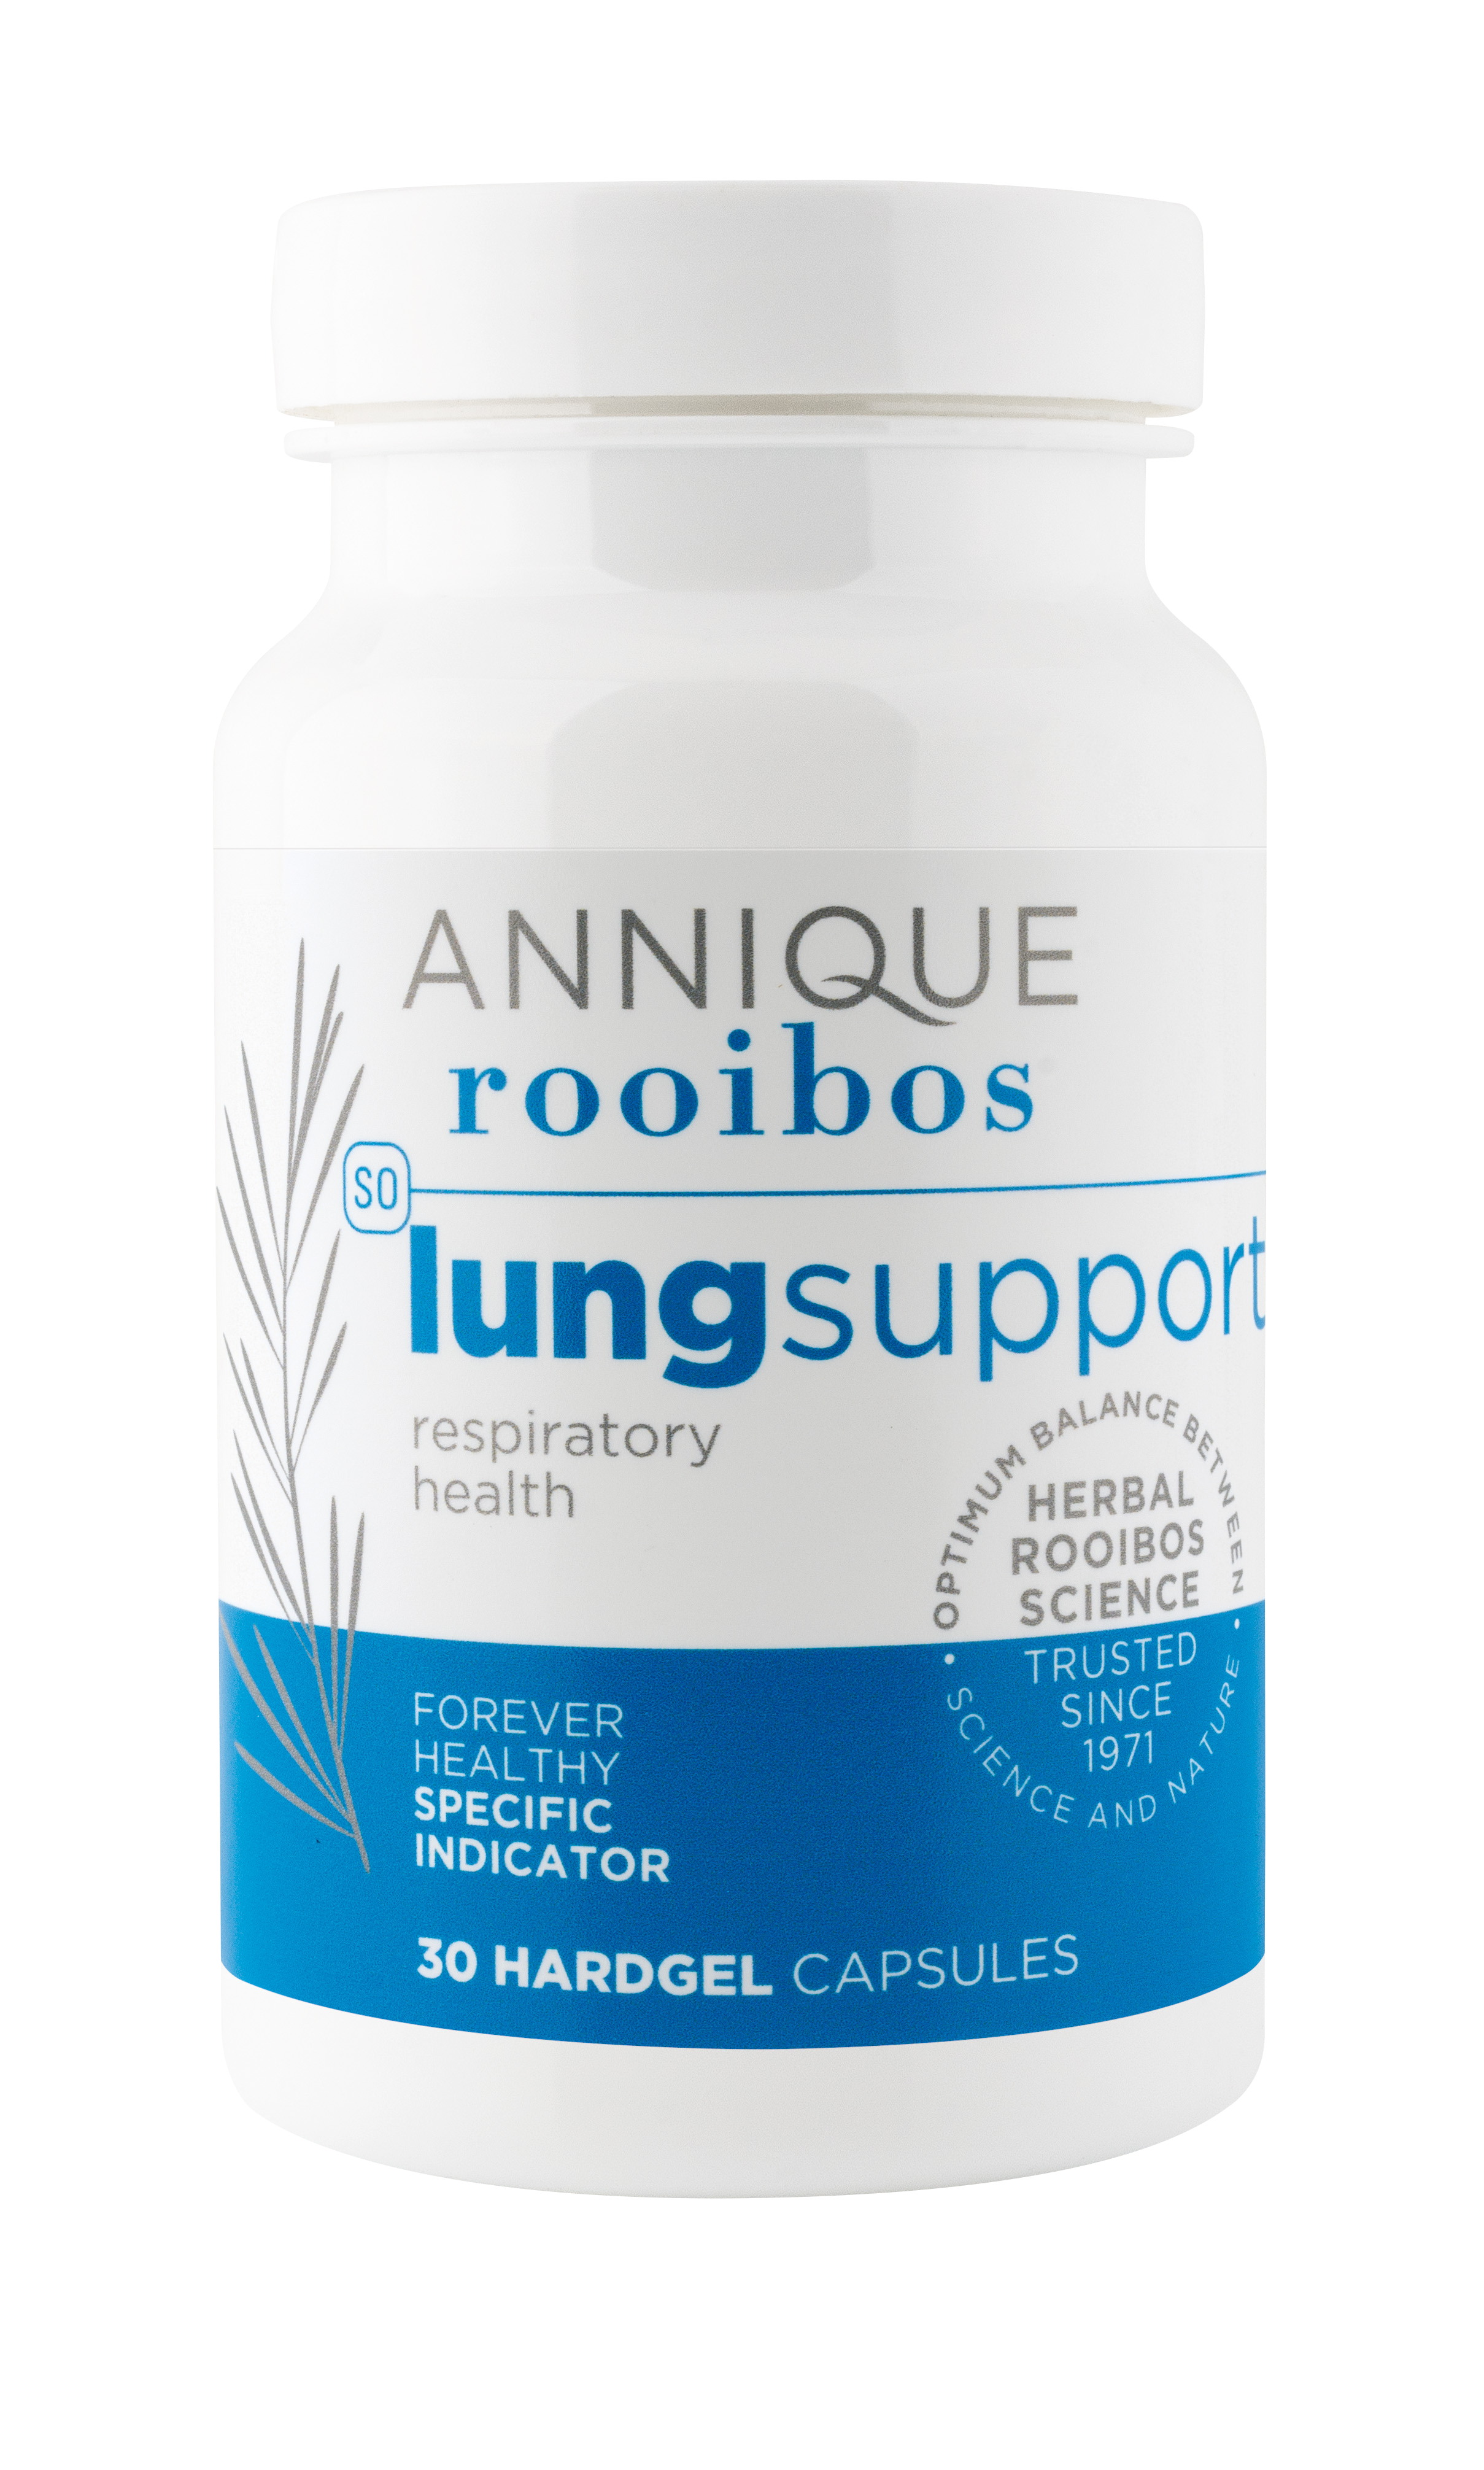 Lung Support – 30 hardgel capsules